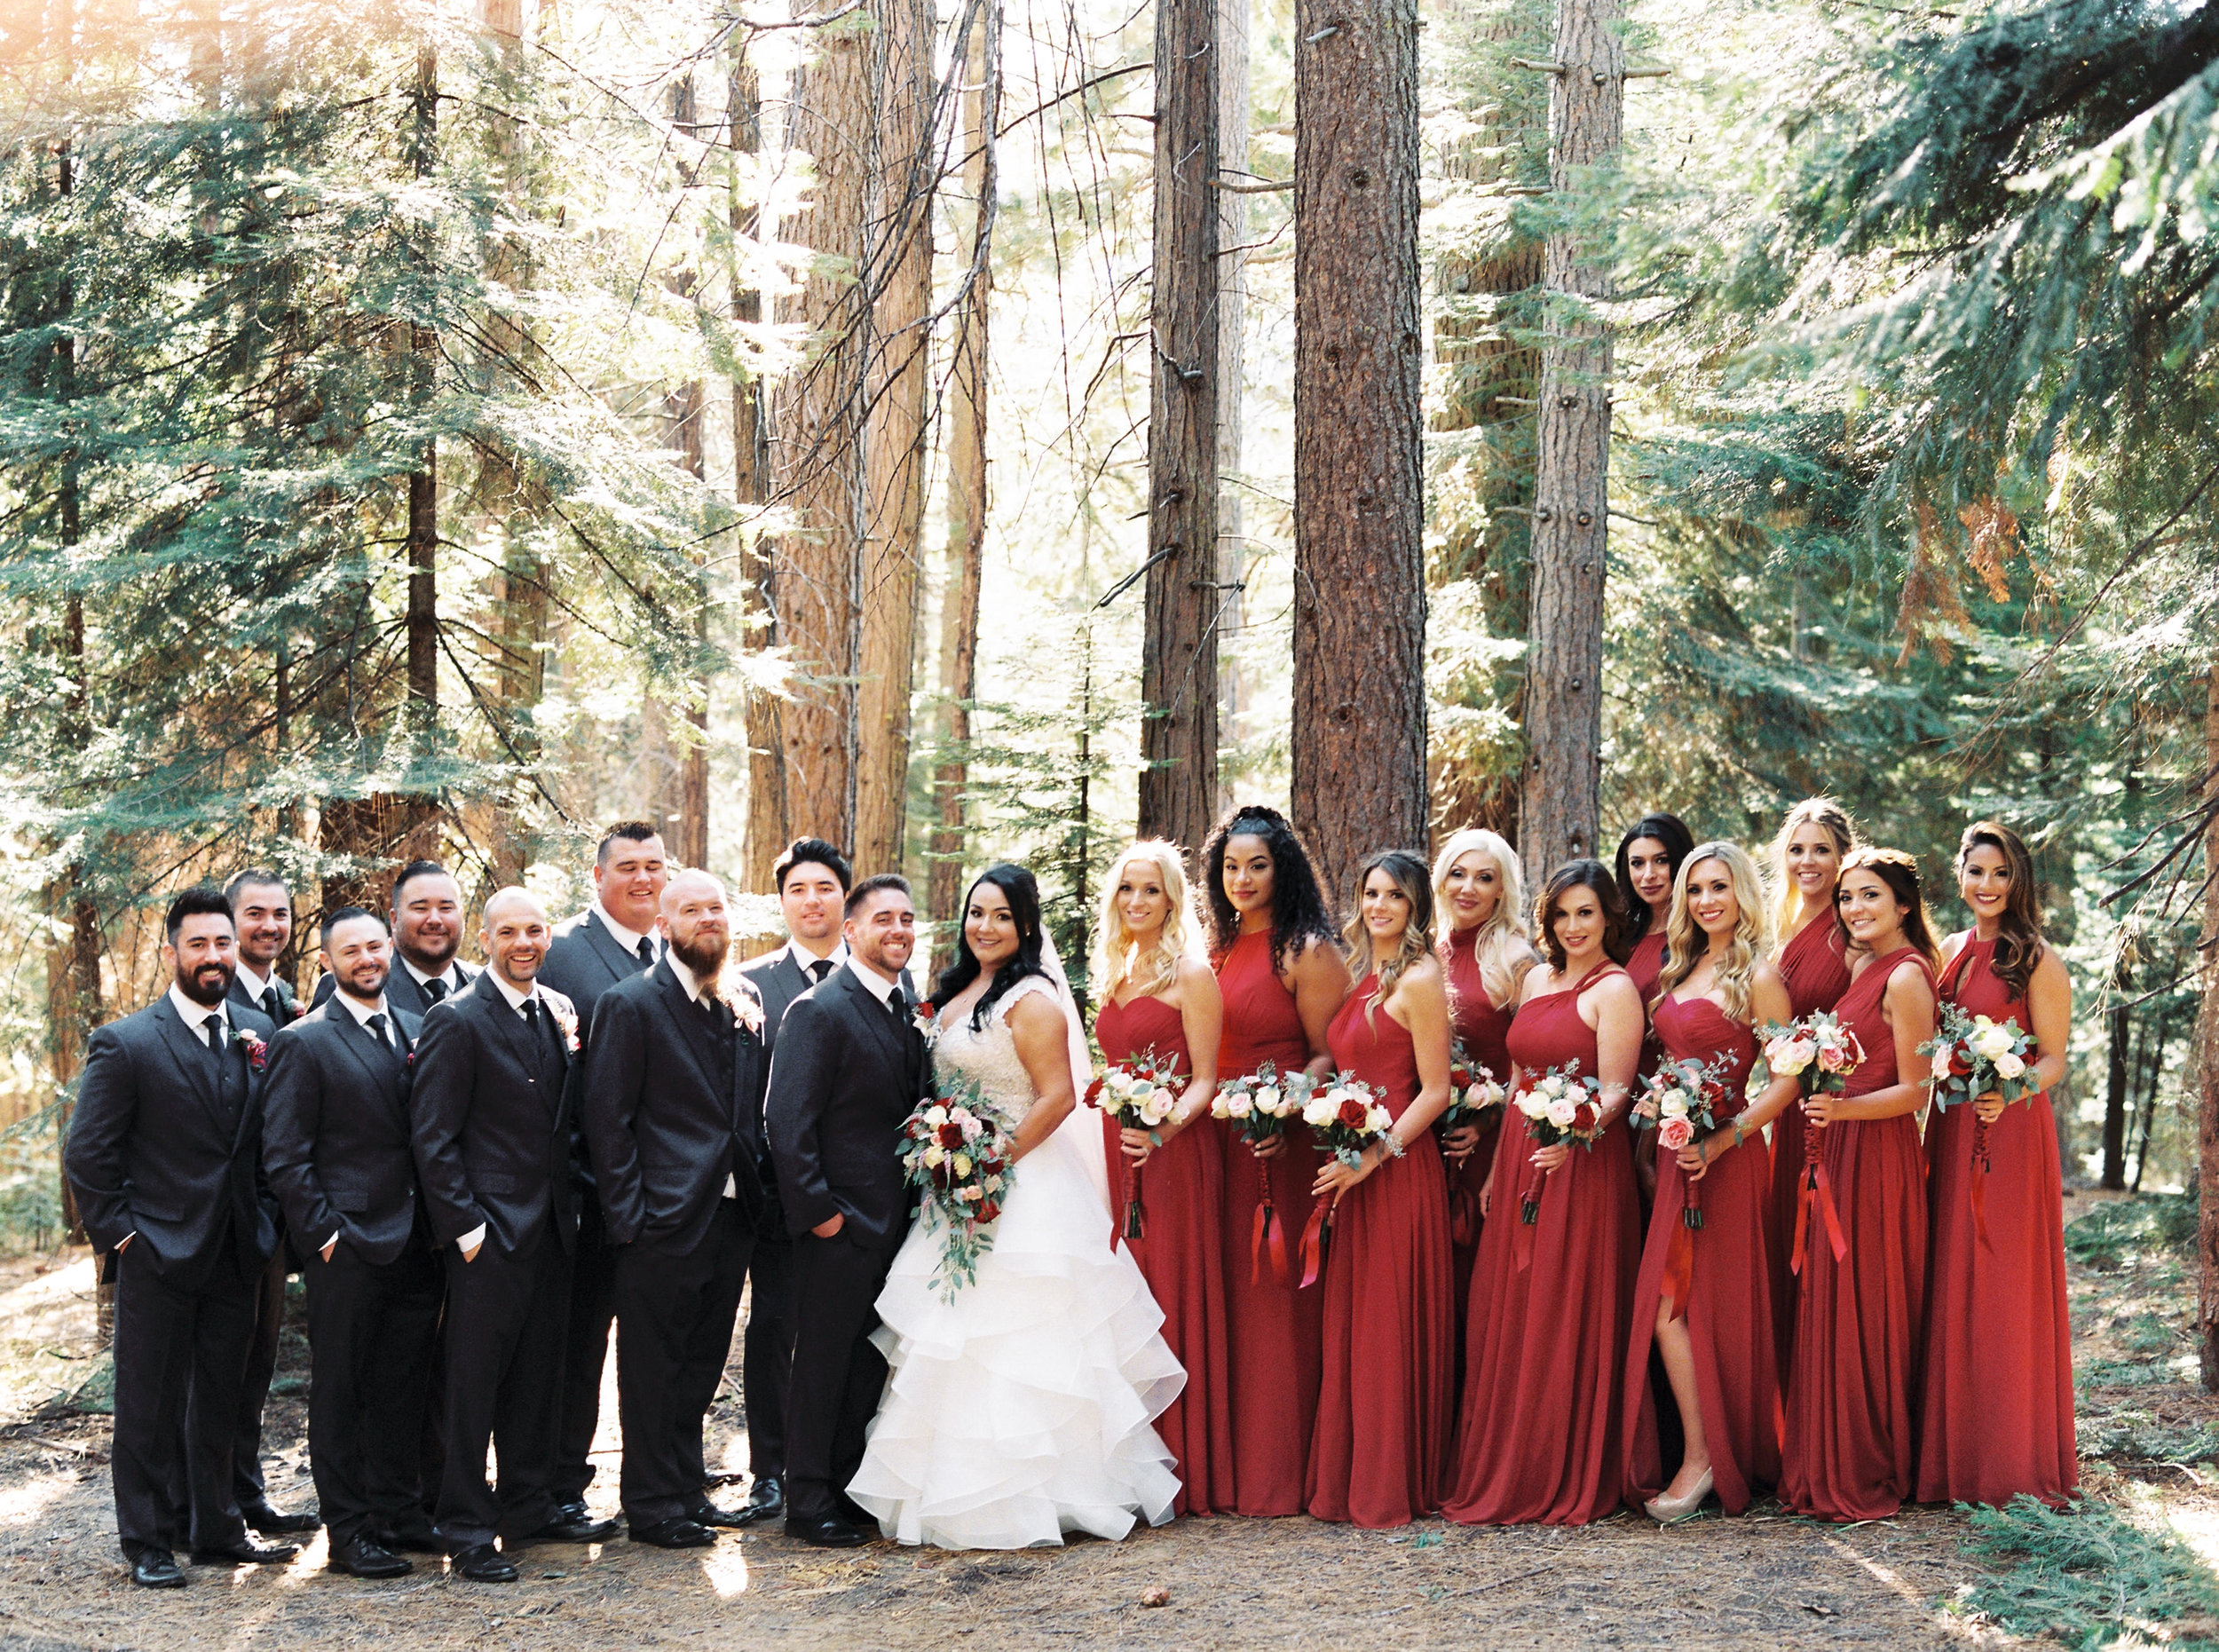 Tenaya-lodge-wedding-at-yosemite-national-park-california-94.jpg